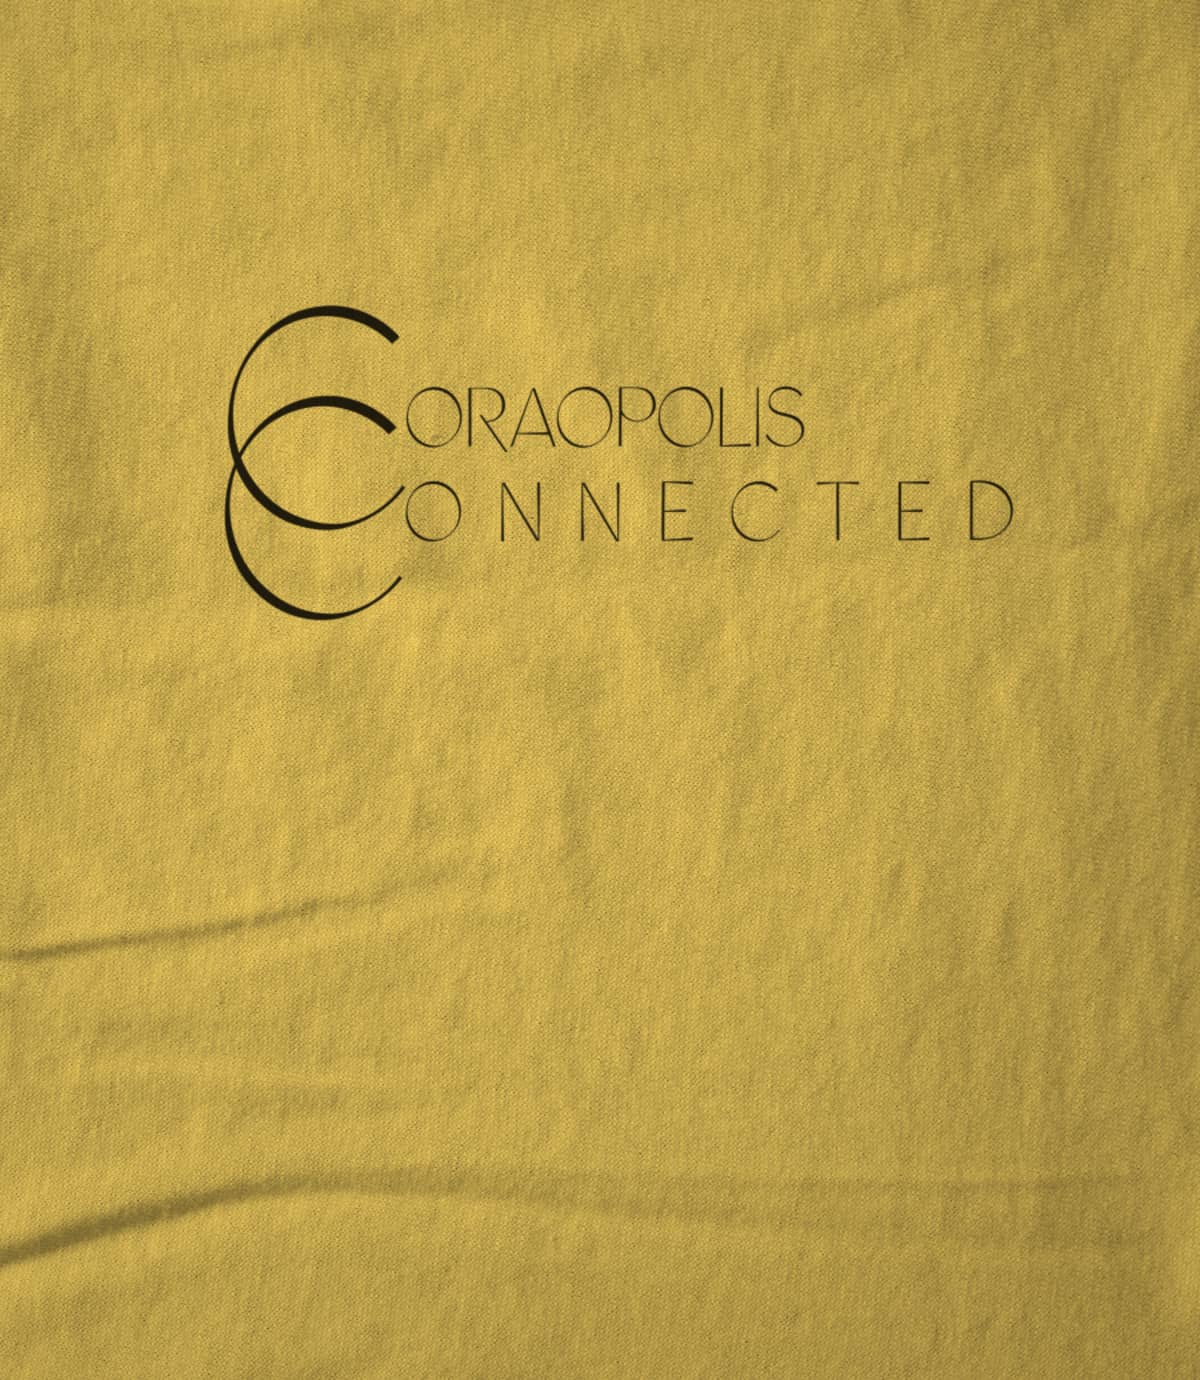 Coraopolis connected white 1627485952